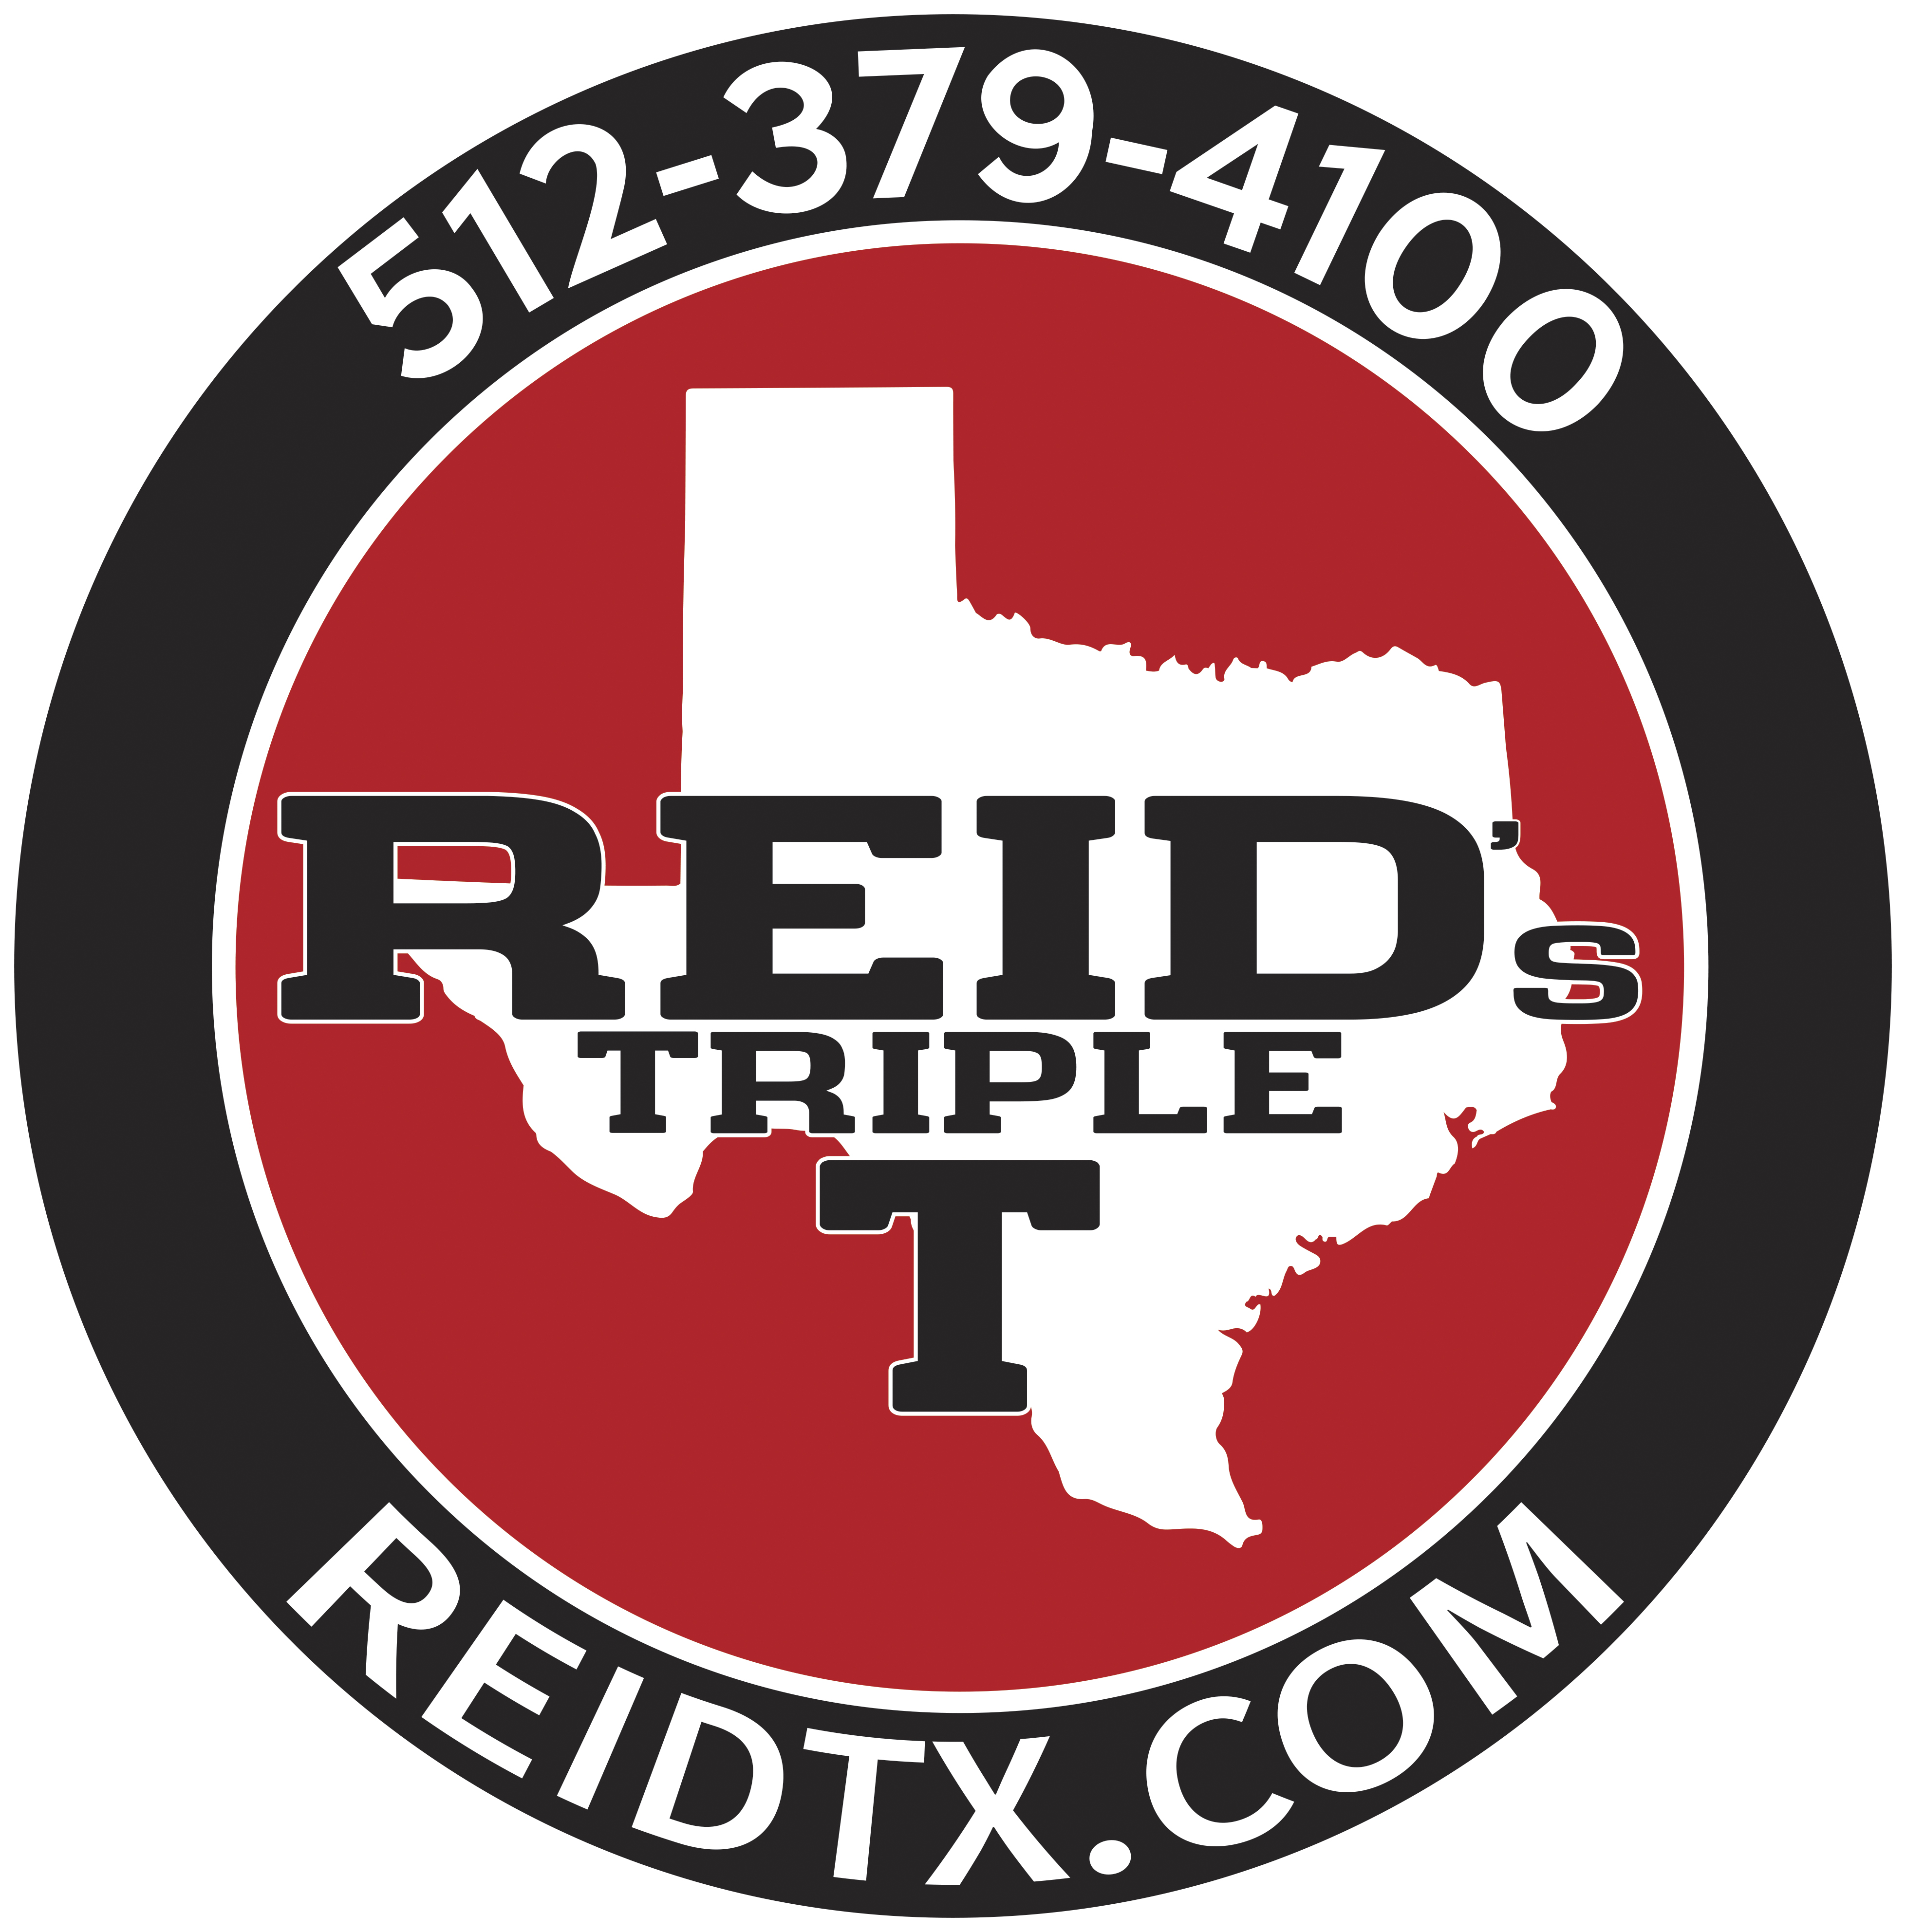 Reid's Triple T is a Agricultural Equipment dealer in Leander, TX